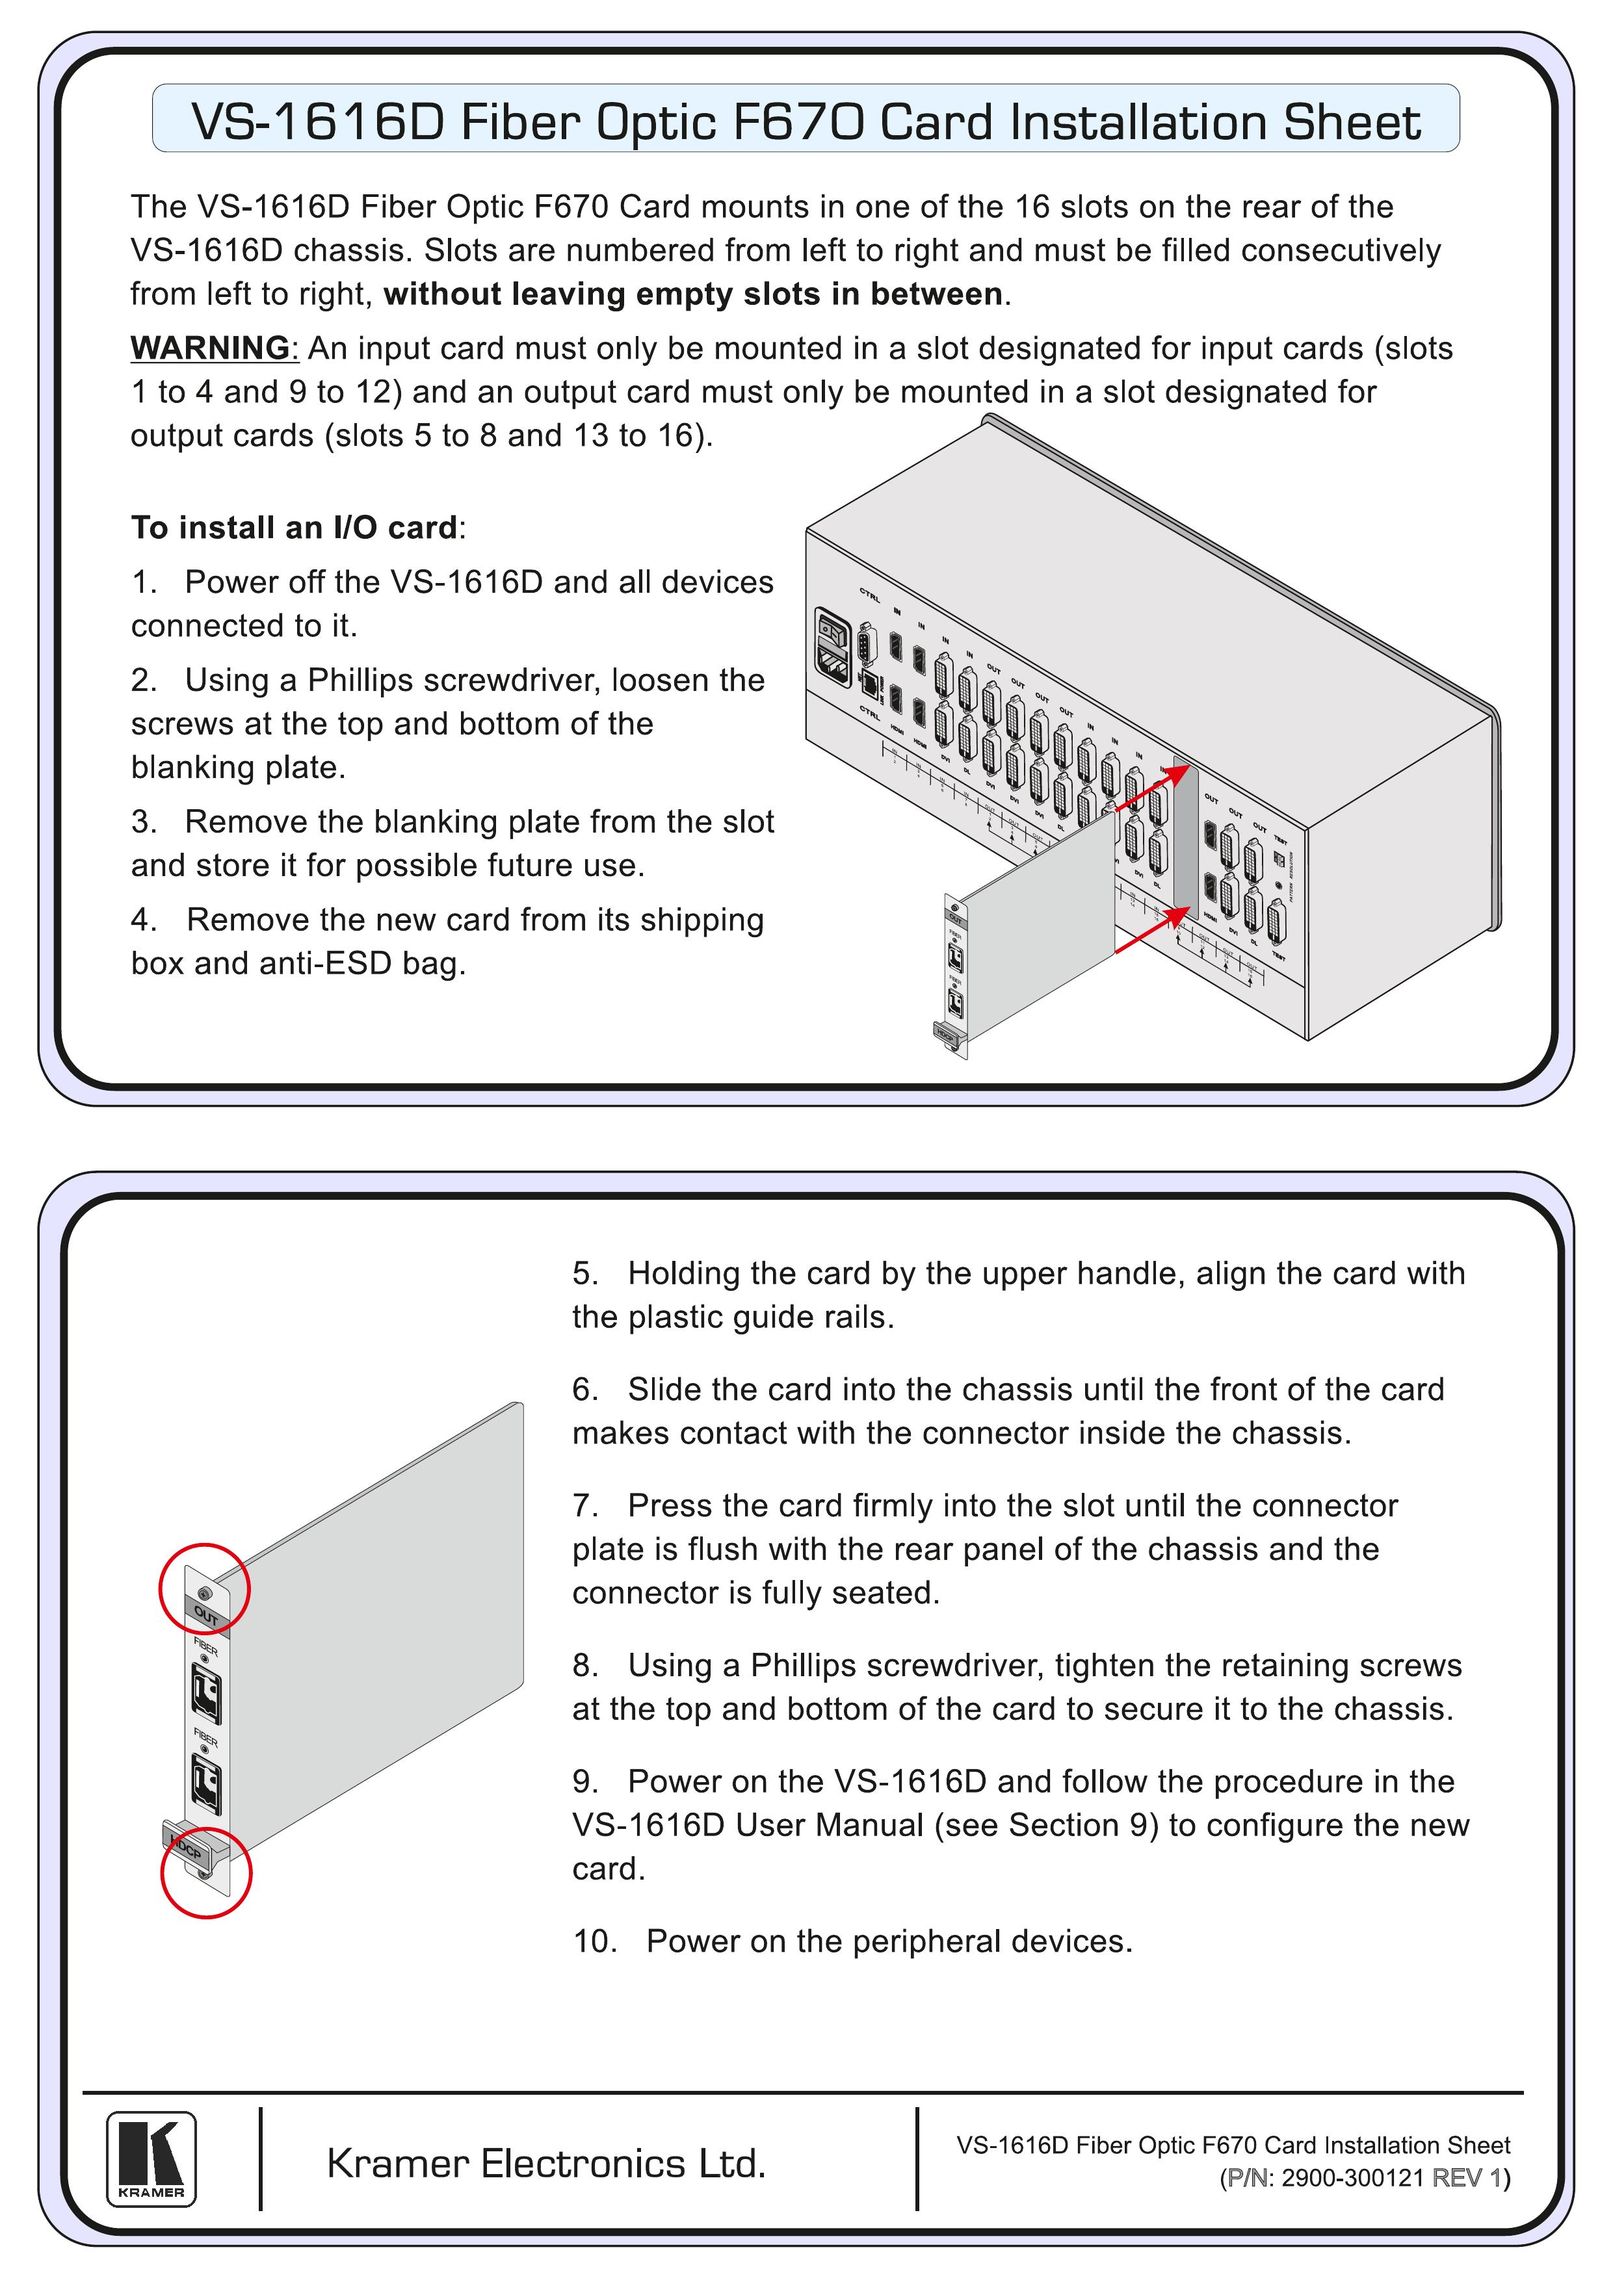 Kramer Electronics VS-1616D Network Hardware User Manual